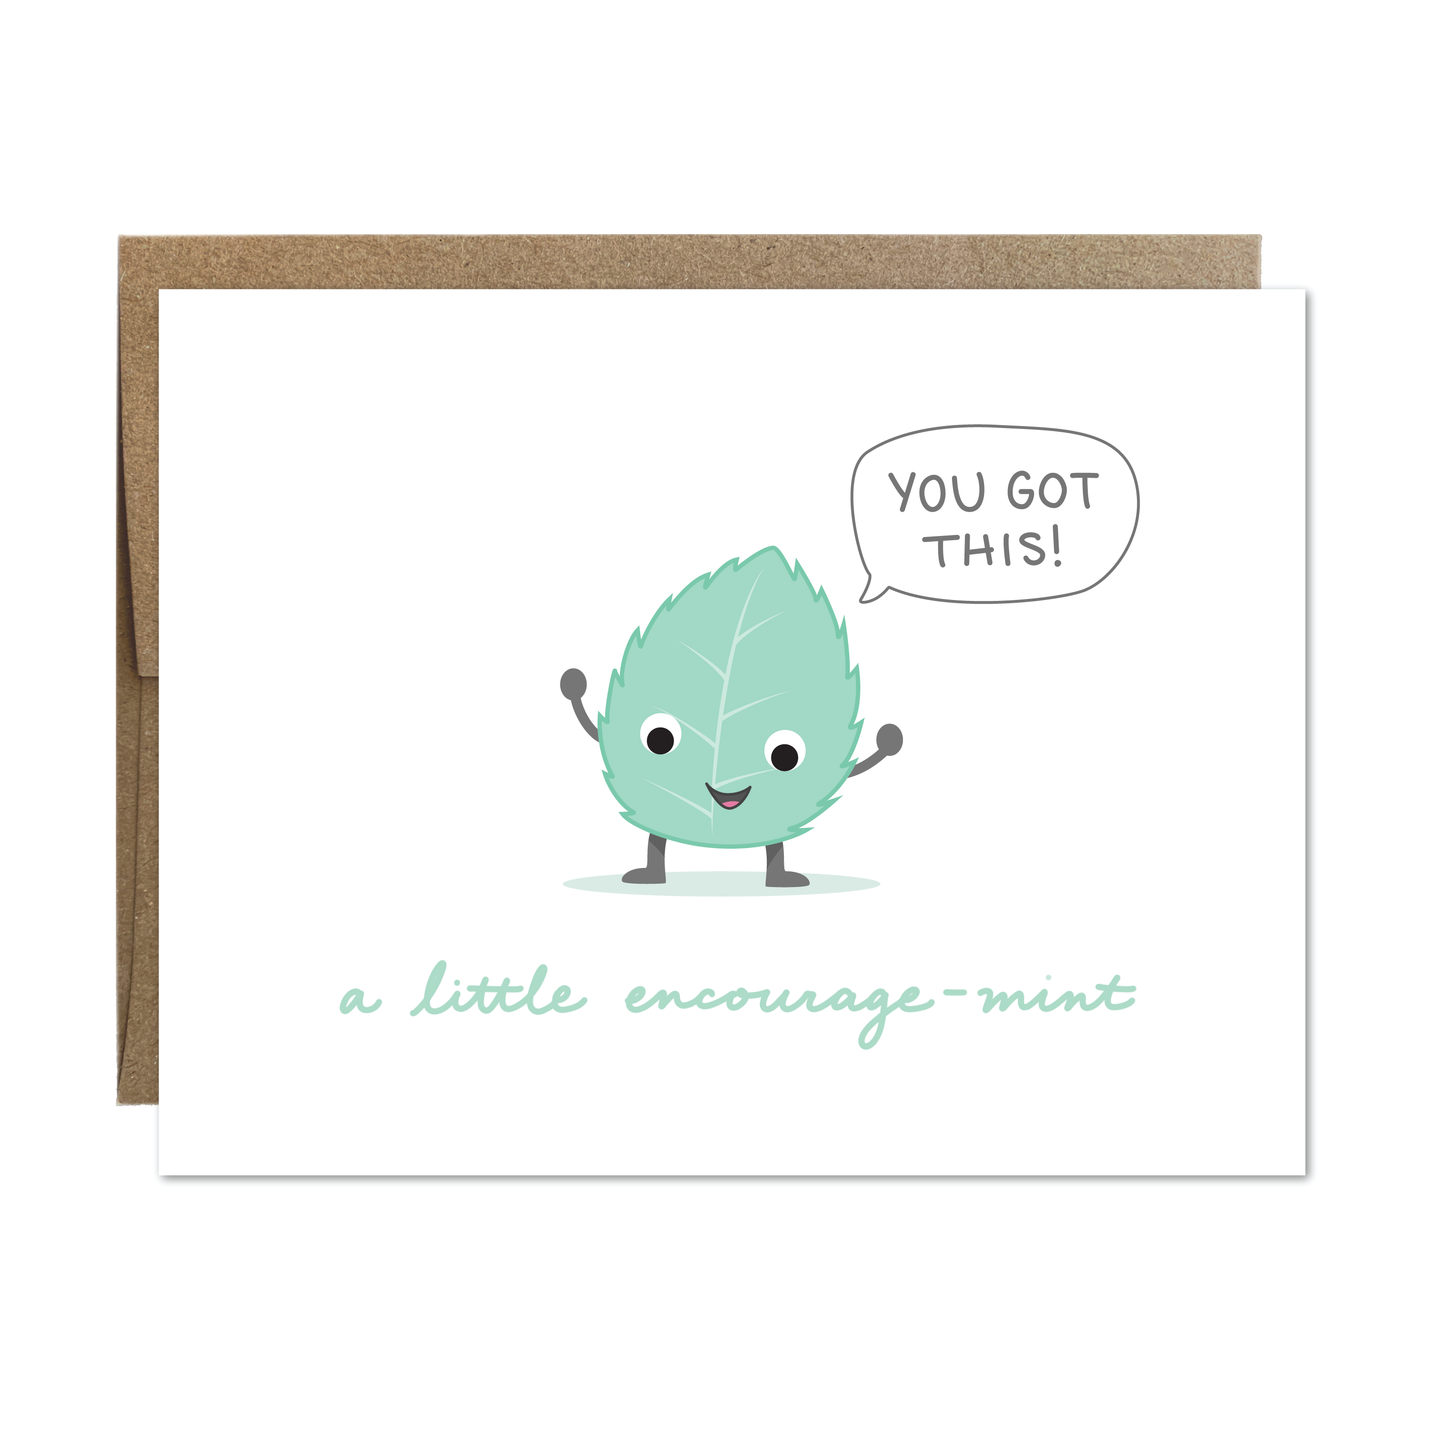 Encourage-mint Card